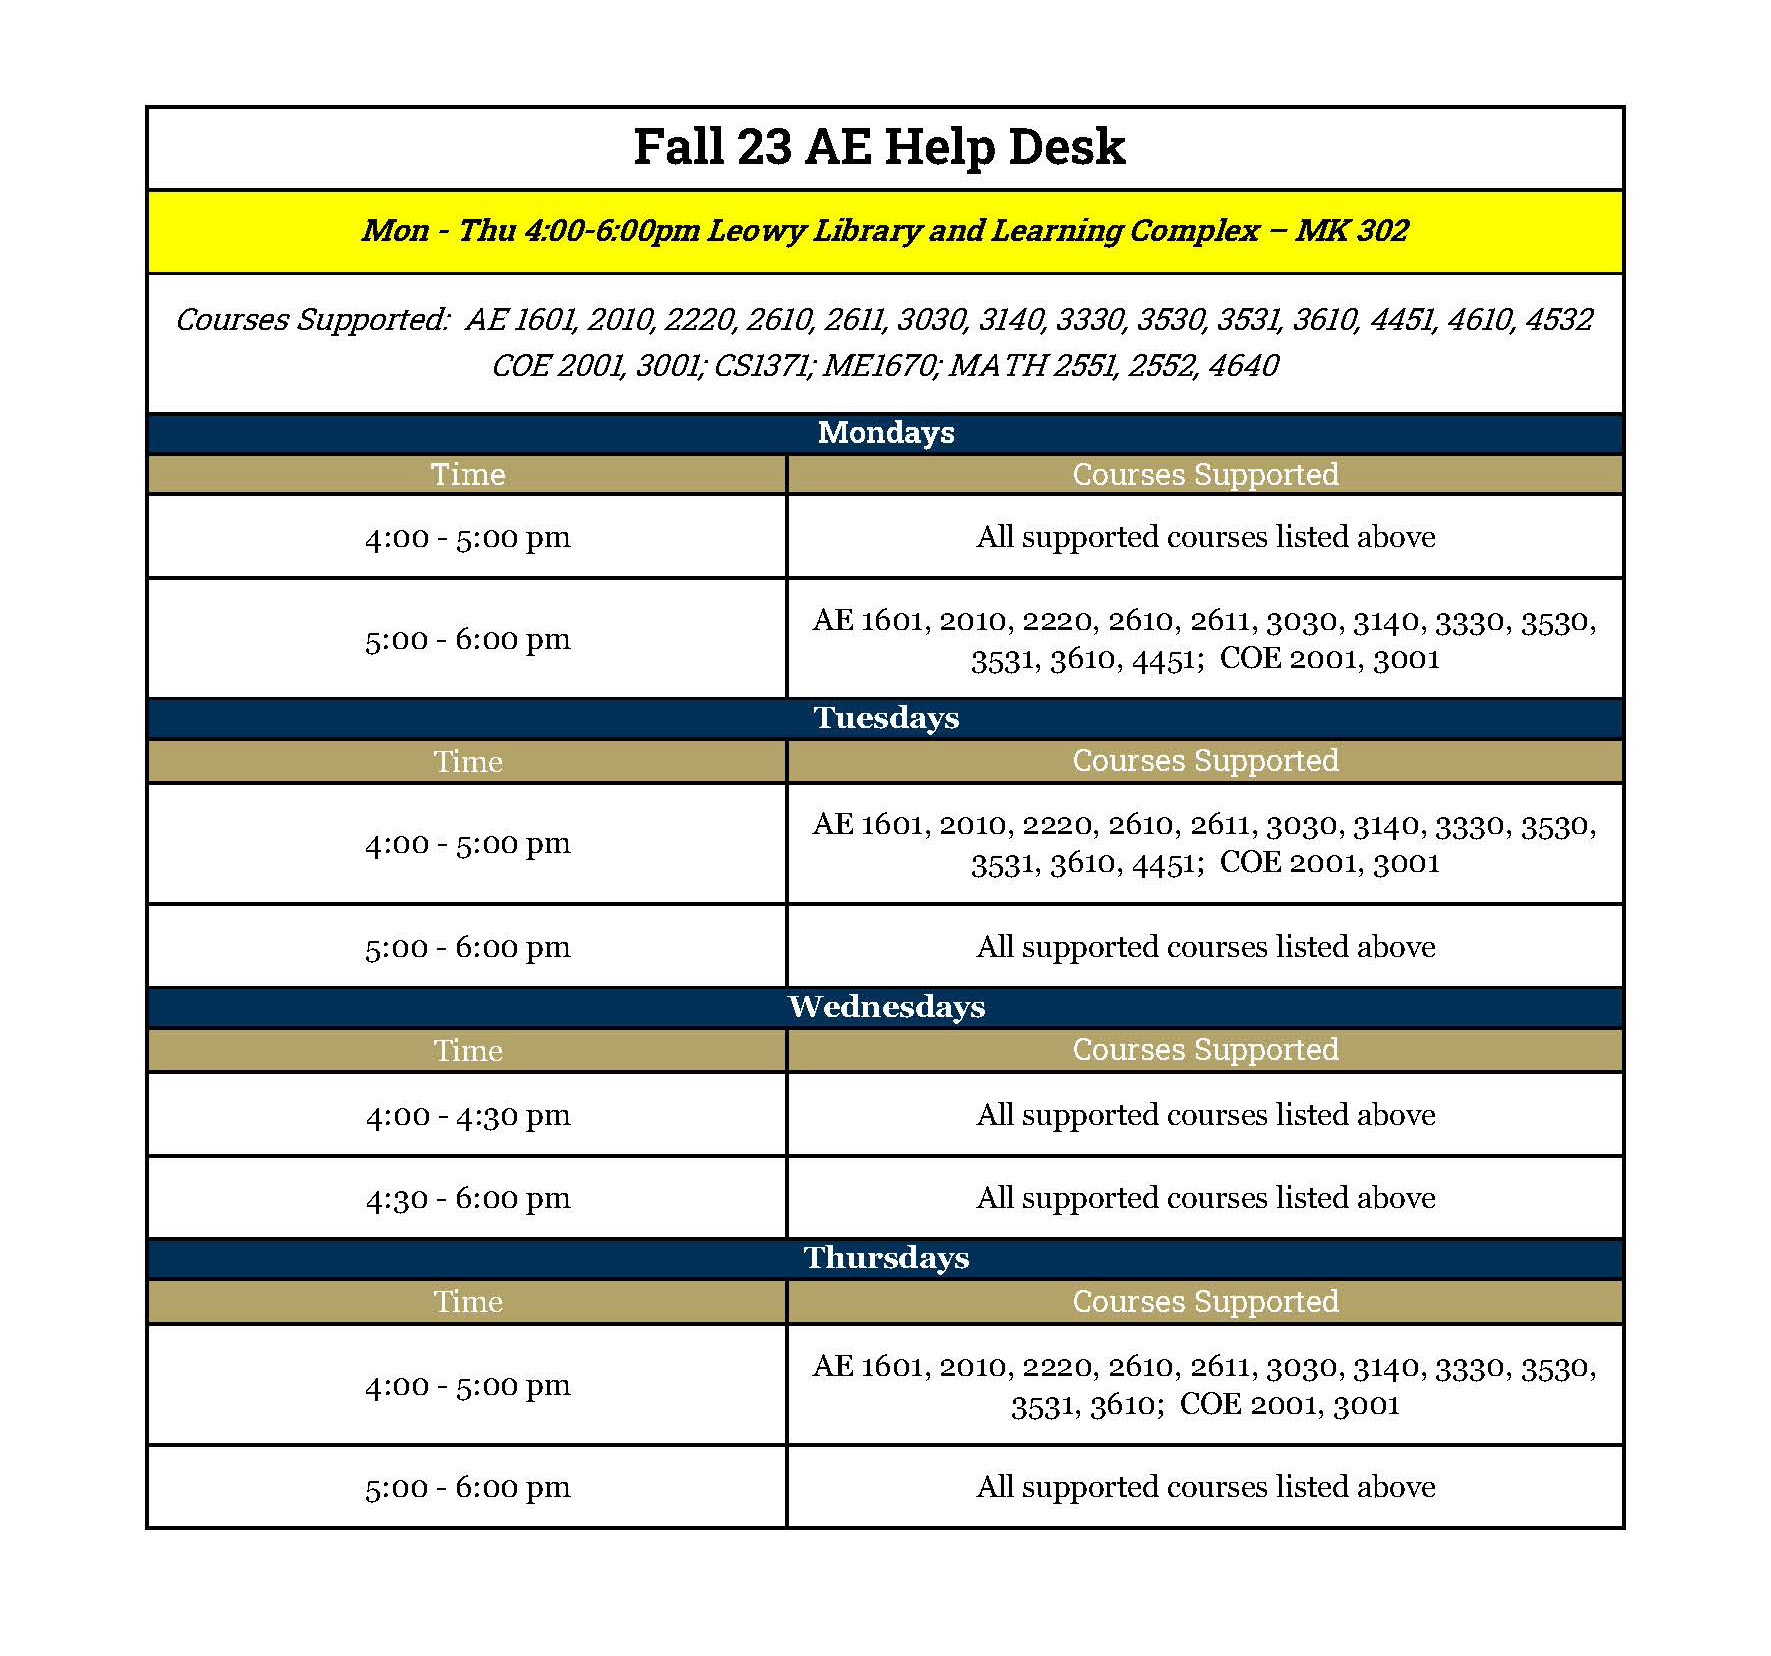 Fall 23 Help Desk  Schedule